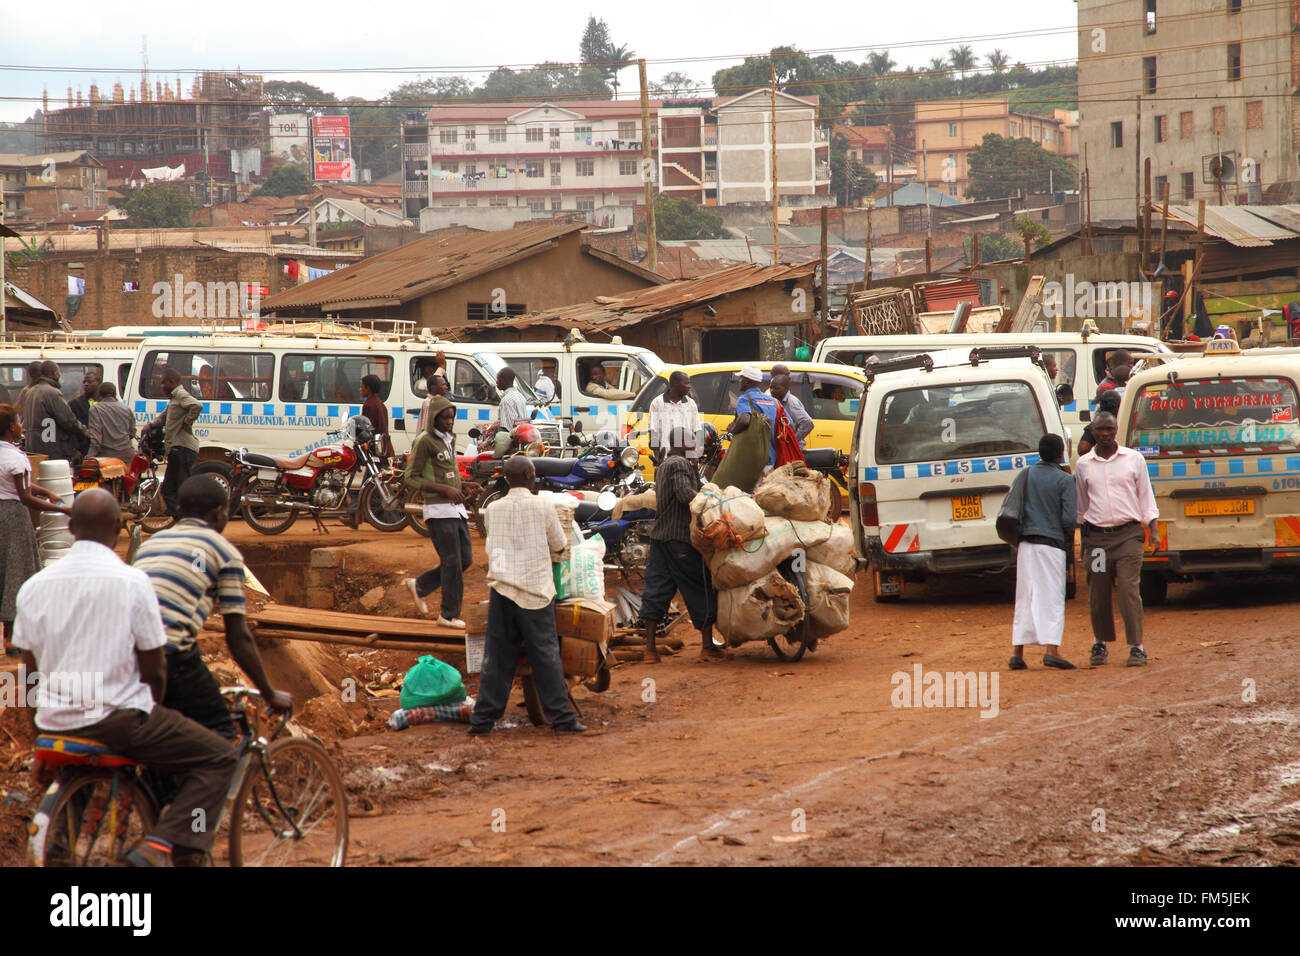 KAMPALA, UGANDA - SEPTEMBER 28, 2012.  A look at life on the side streets of Kampala, Uganda on September 28,2012. Stock Photo